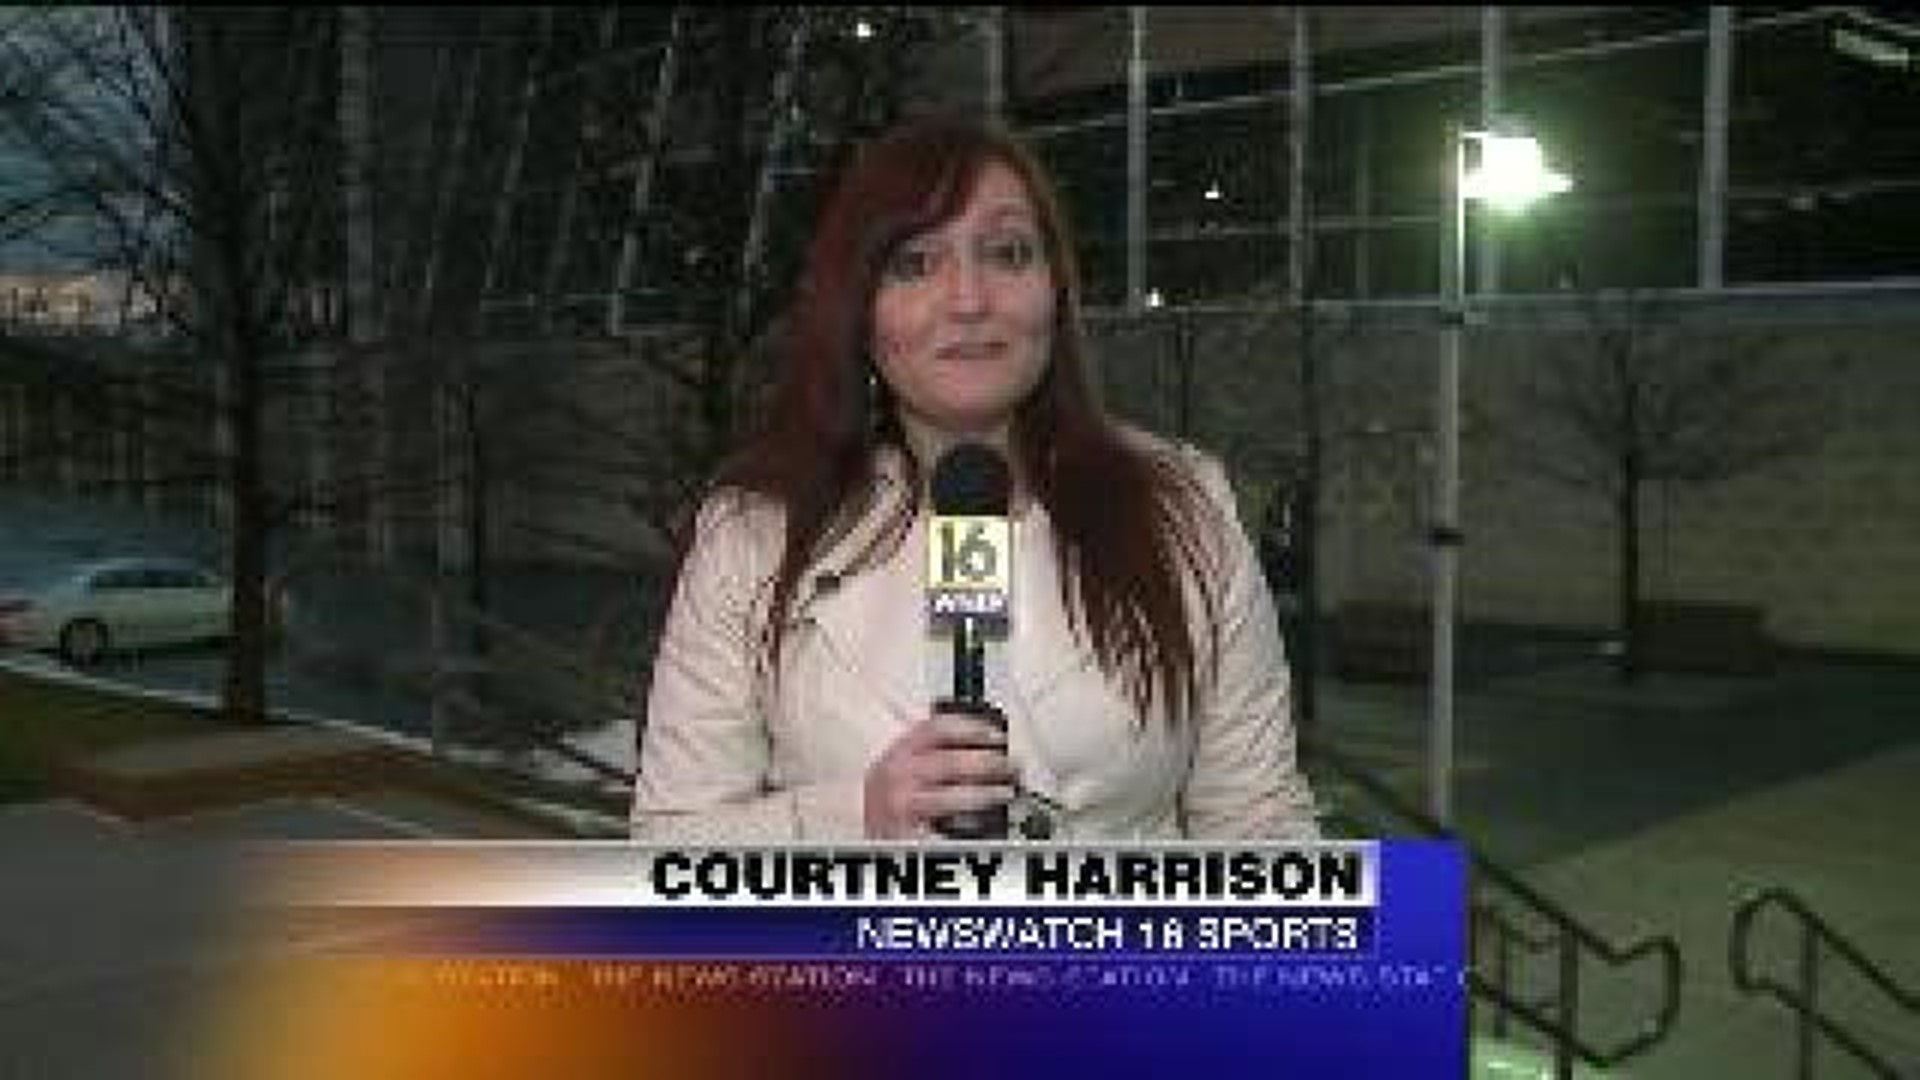 Courtney Harrison Report On James Franklin